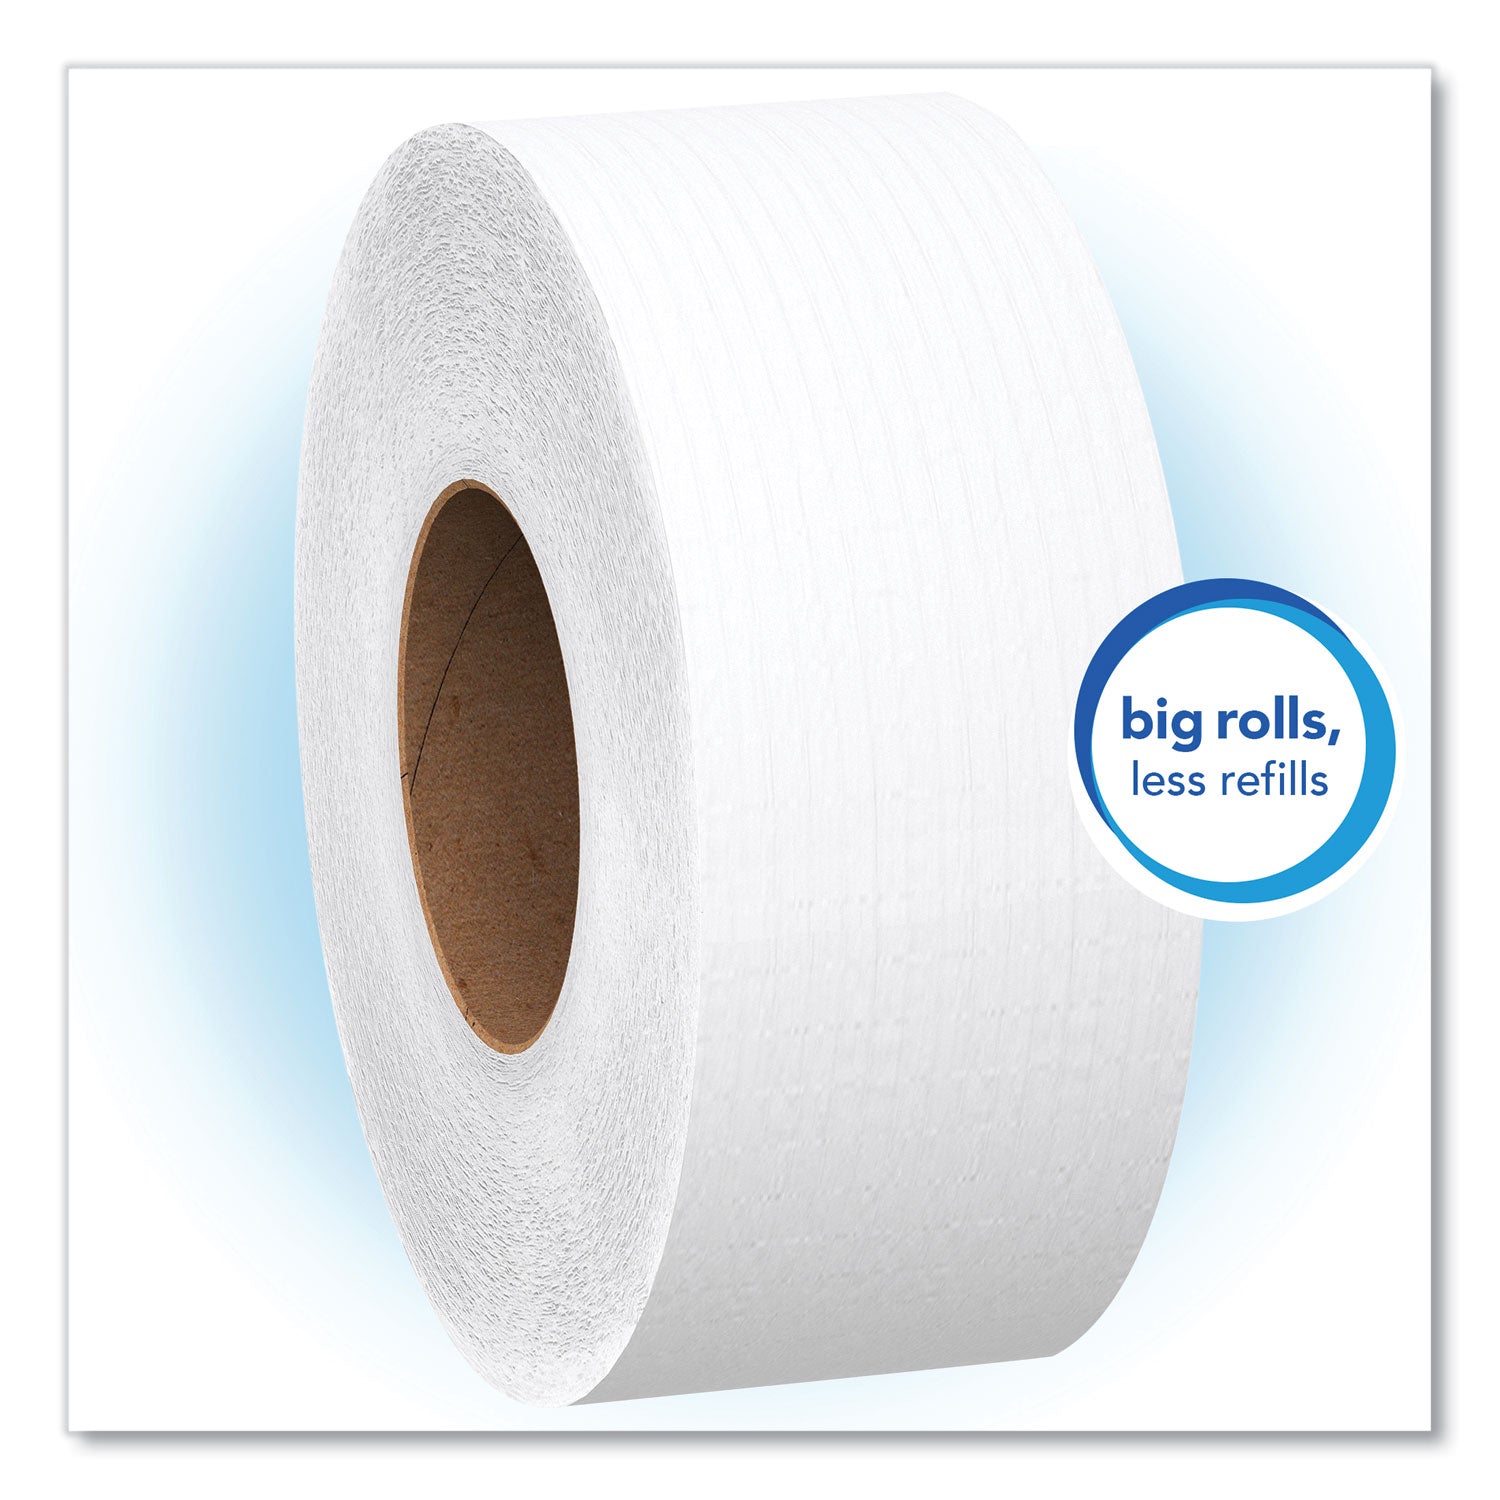 Essential JRT Jumbo Roll Bathroom Tissue, Septic Safe, 1-Ply, White, 3.55" x 2,000 ft, 12 Rolls/Carton - 